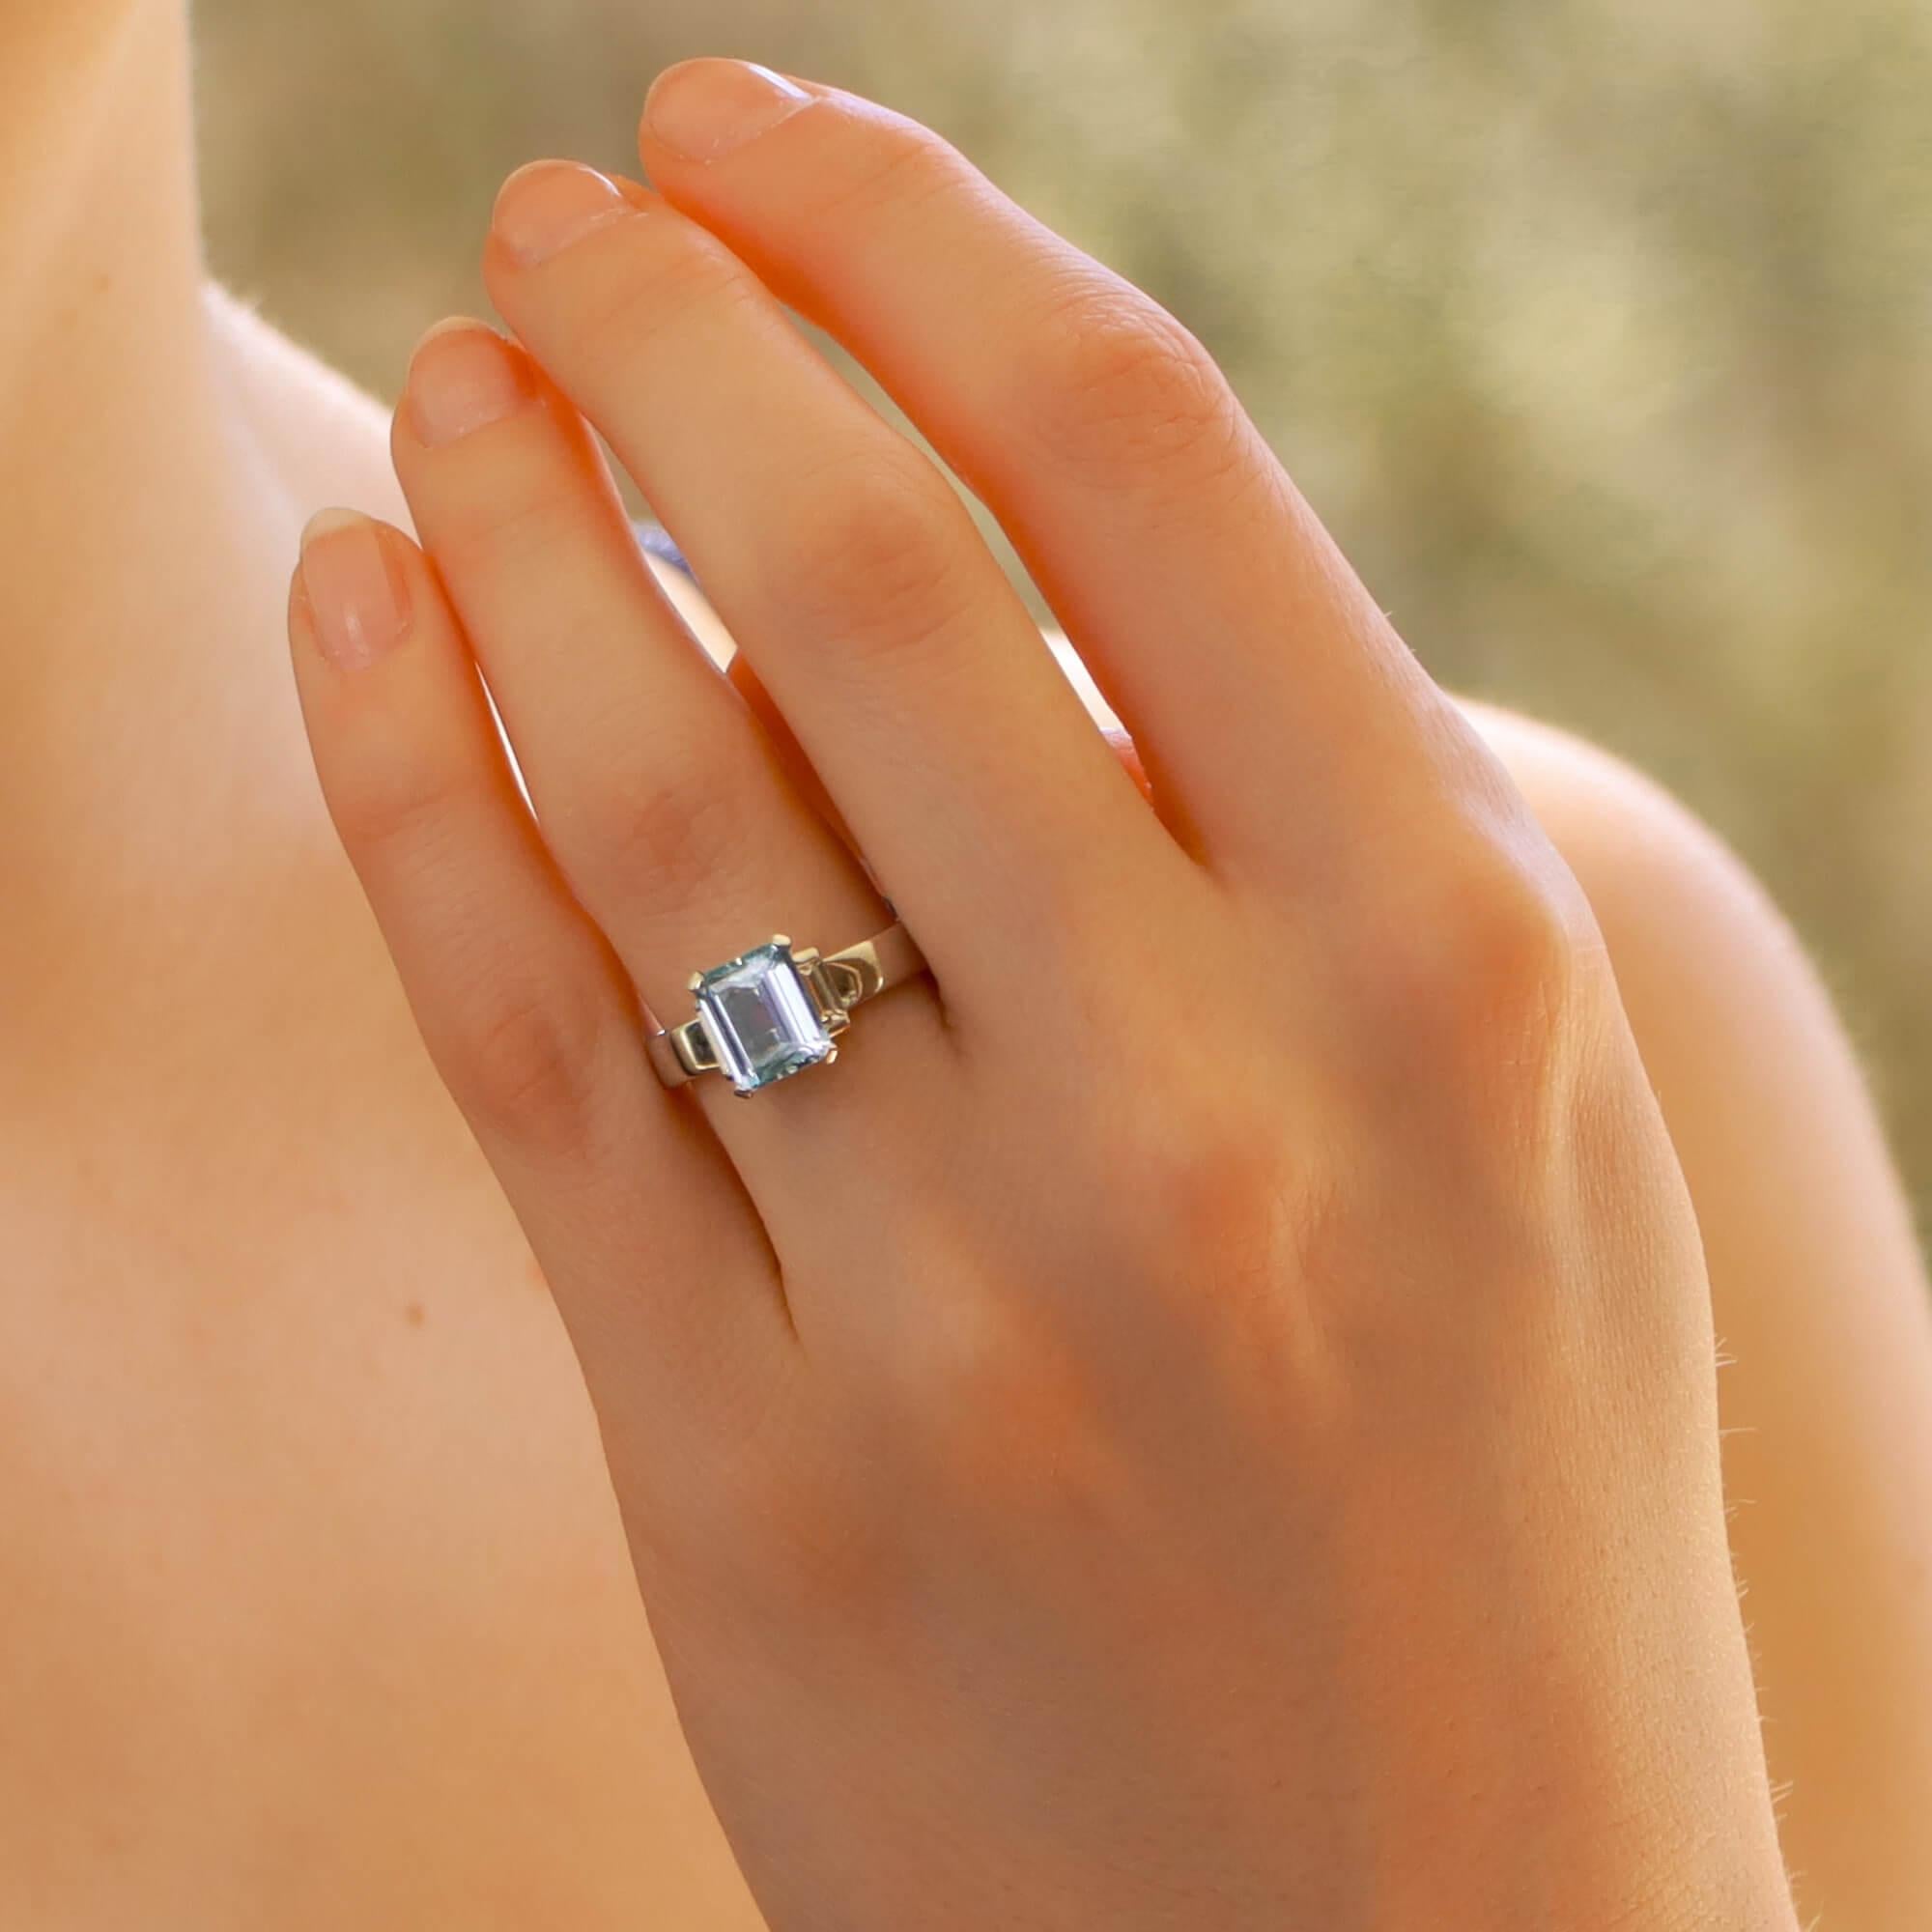 aquamarine engagement ring set